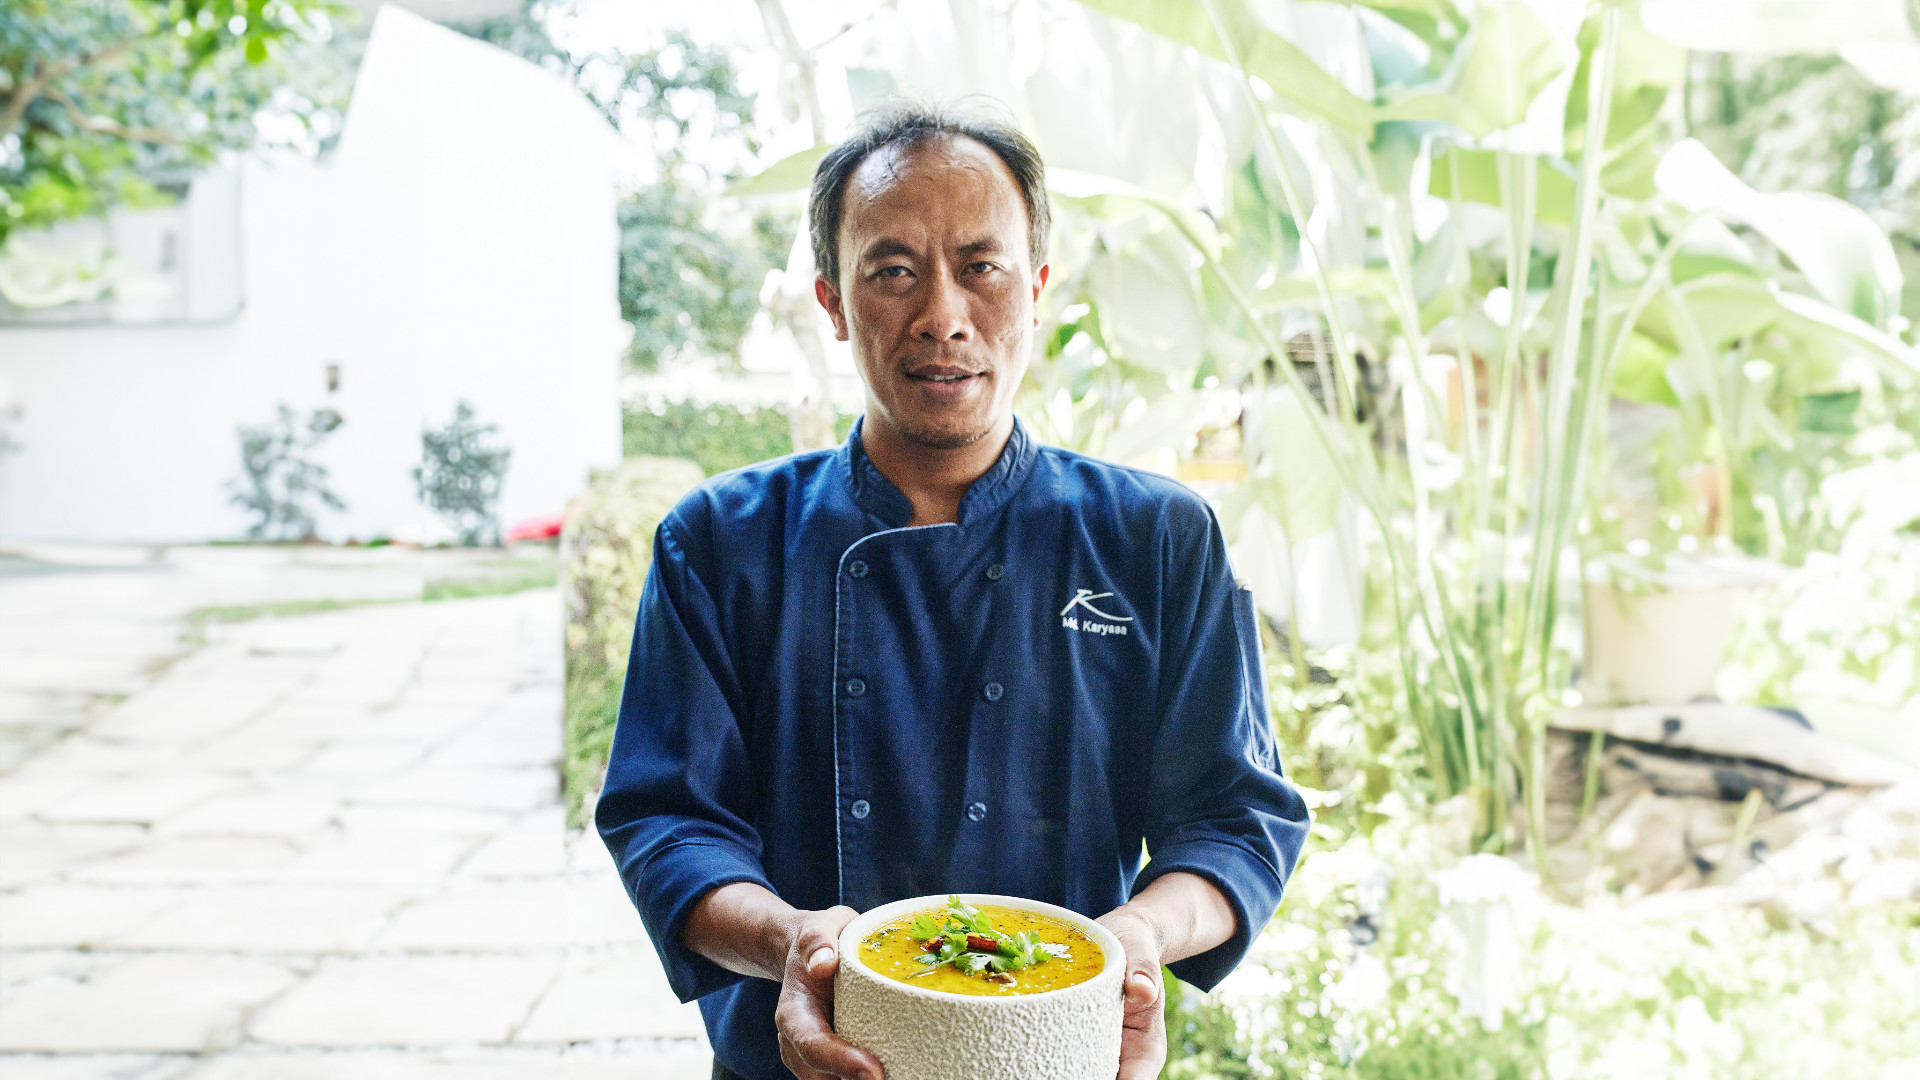 Meet Chef Karyasa